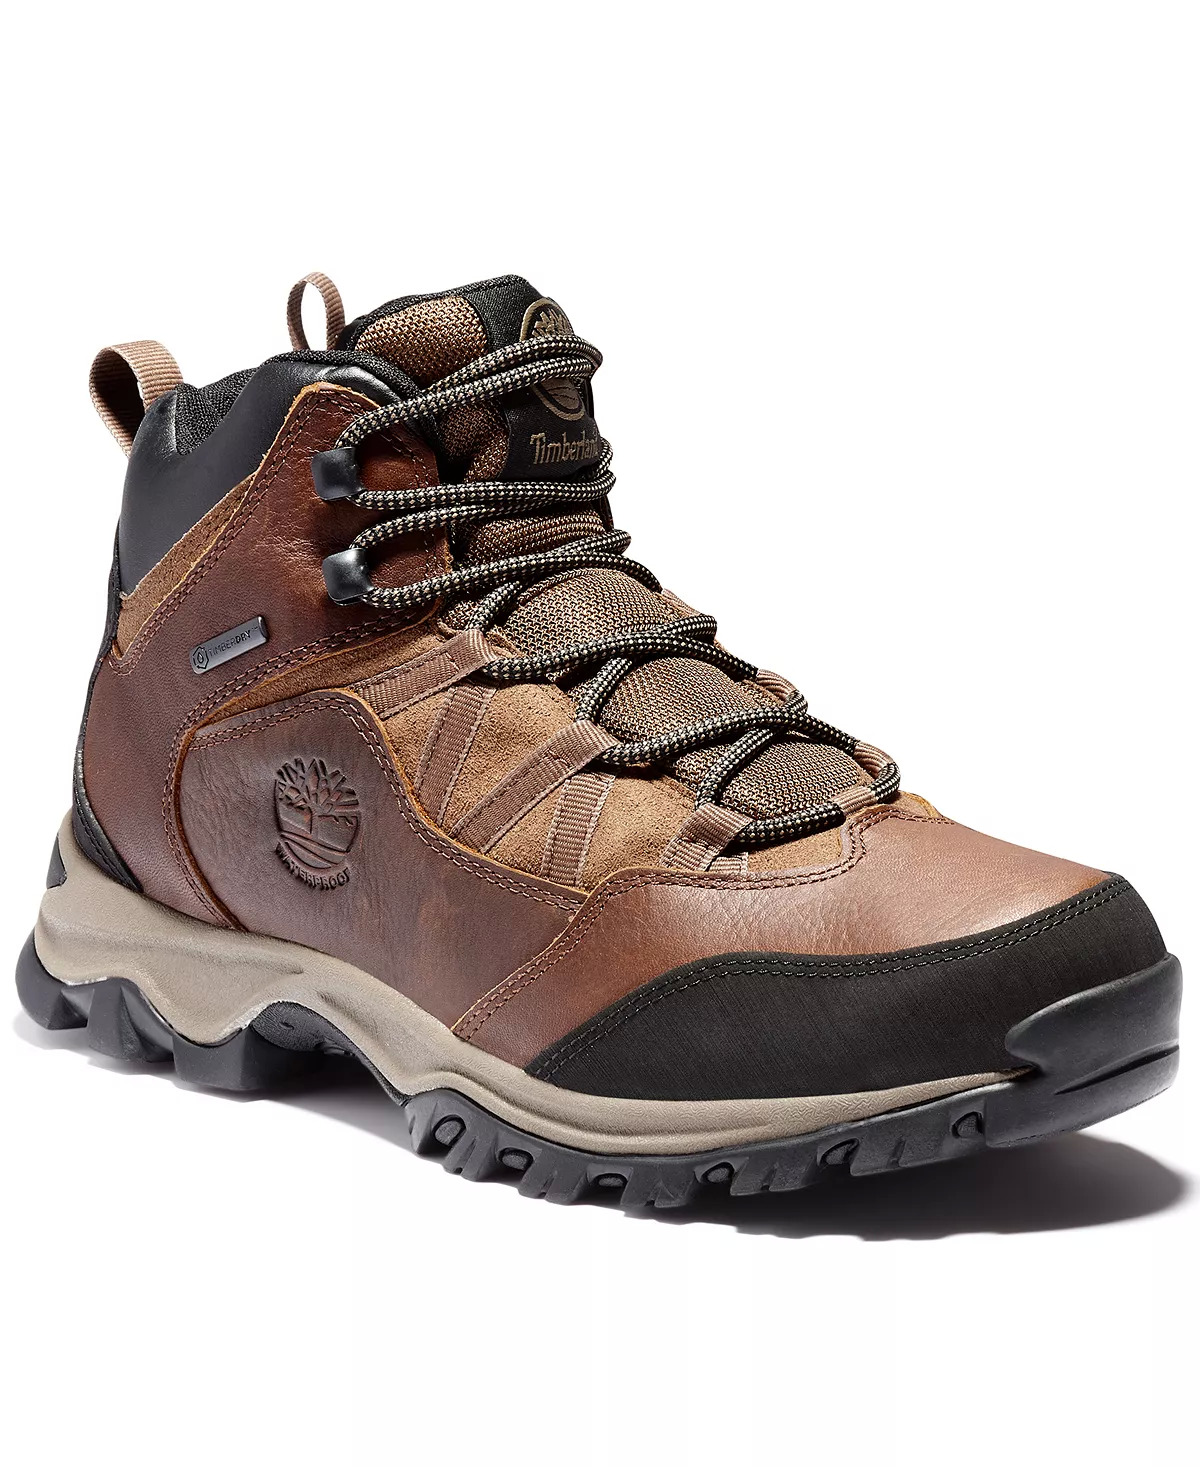 Direct Pasen Oprichter Macys Shoes Flash Sale: Timberland Men's Mt. Major II Mid Waterproof Hiking  Boots